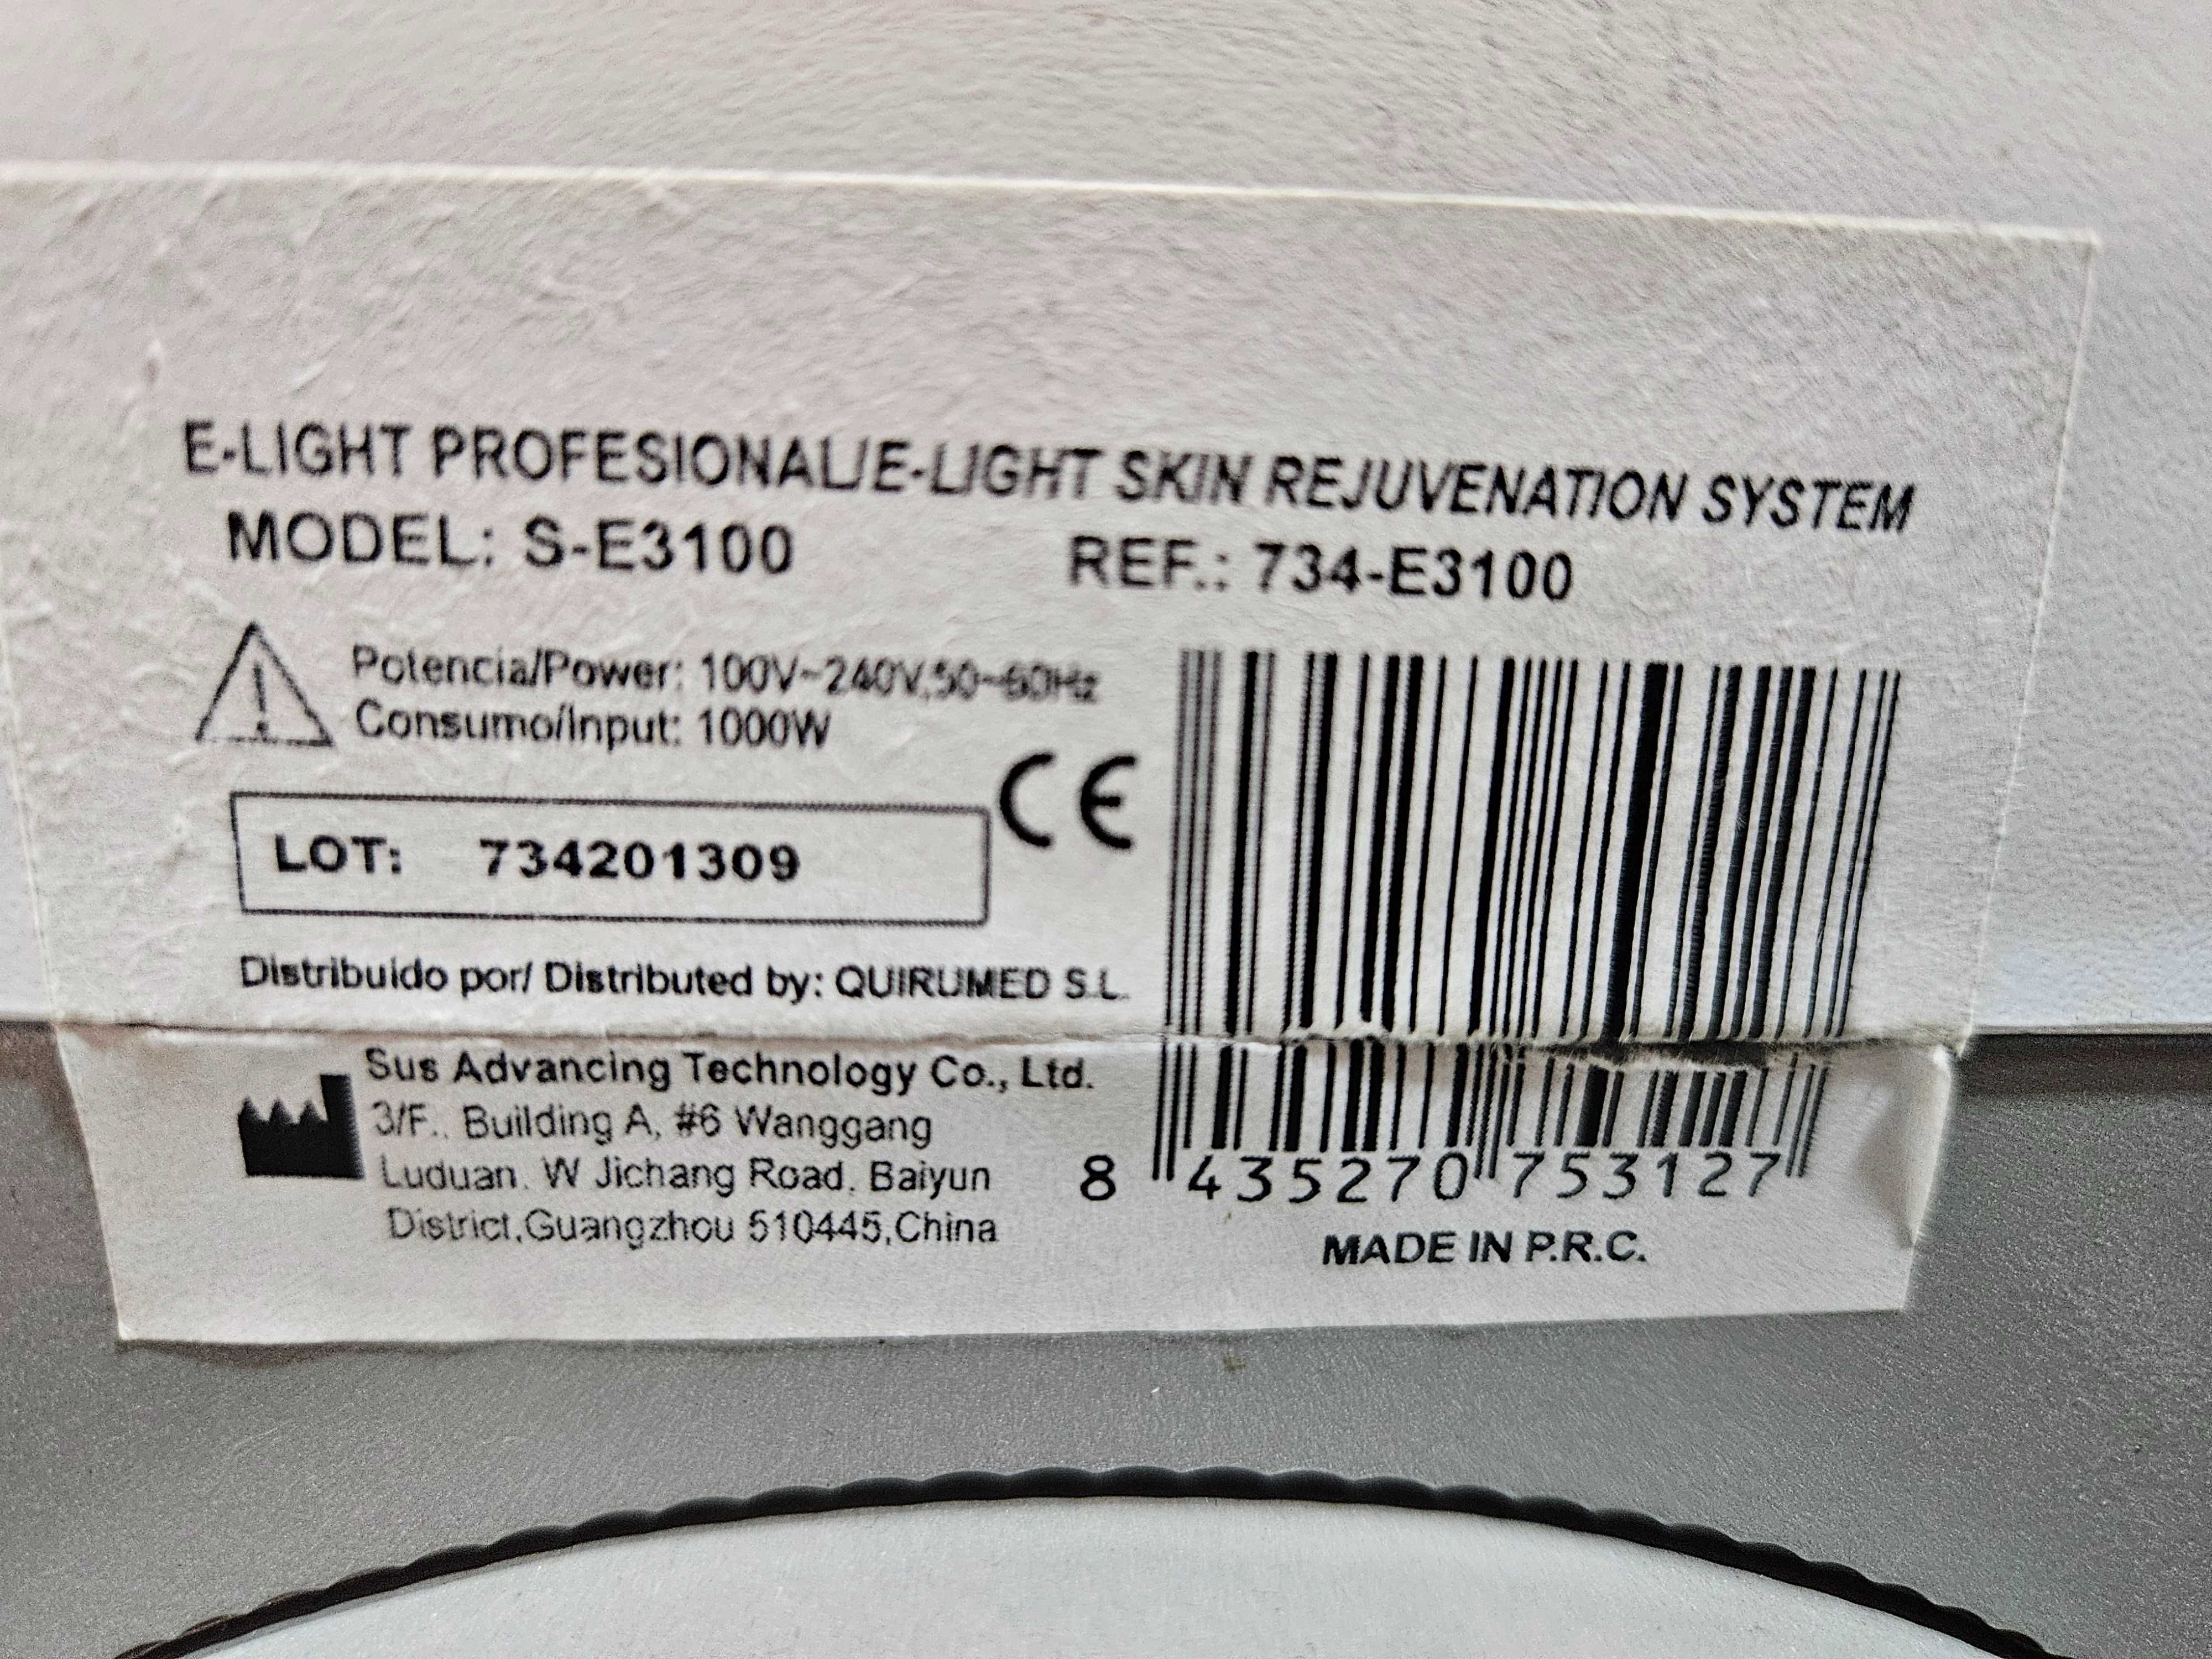 E-Lignt Professiional E-LIGHT SKIN Rejuvenition Sustem Model S-E3100